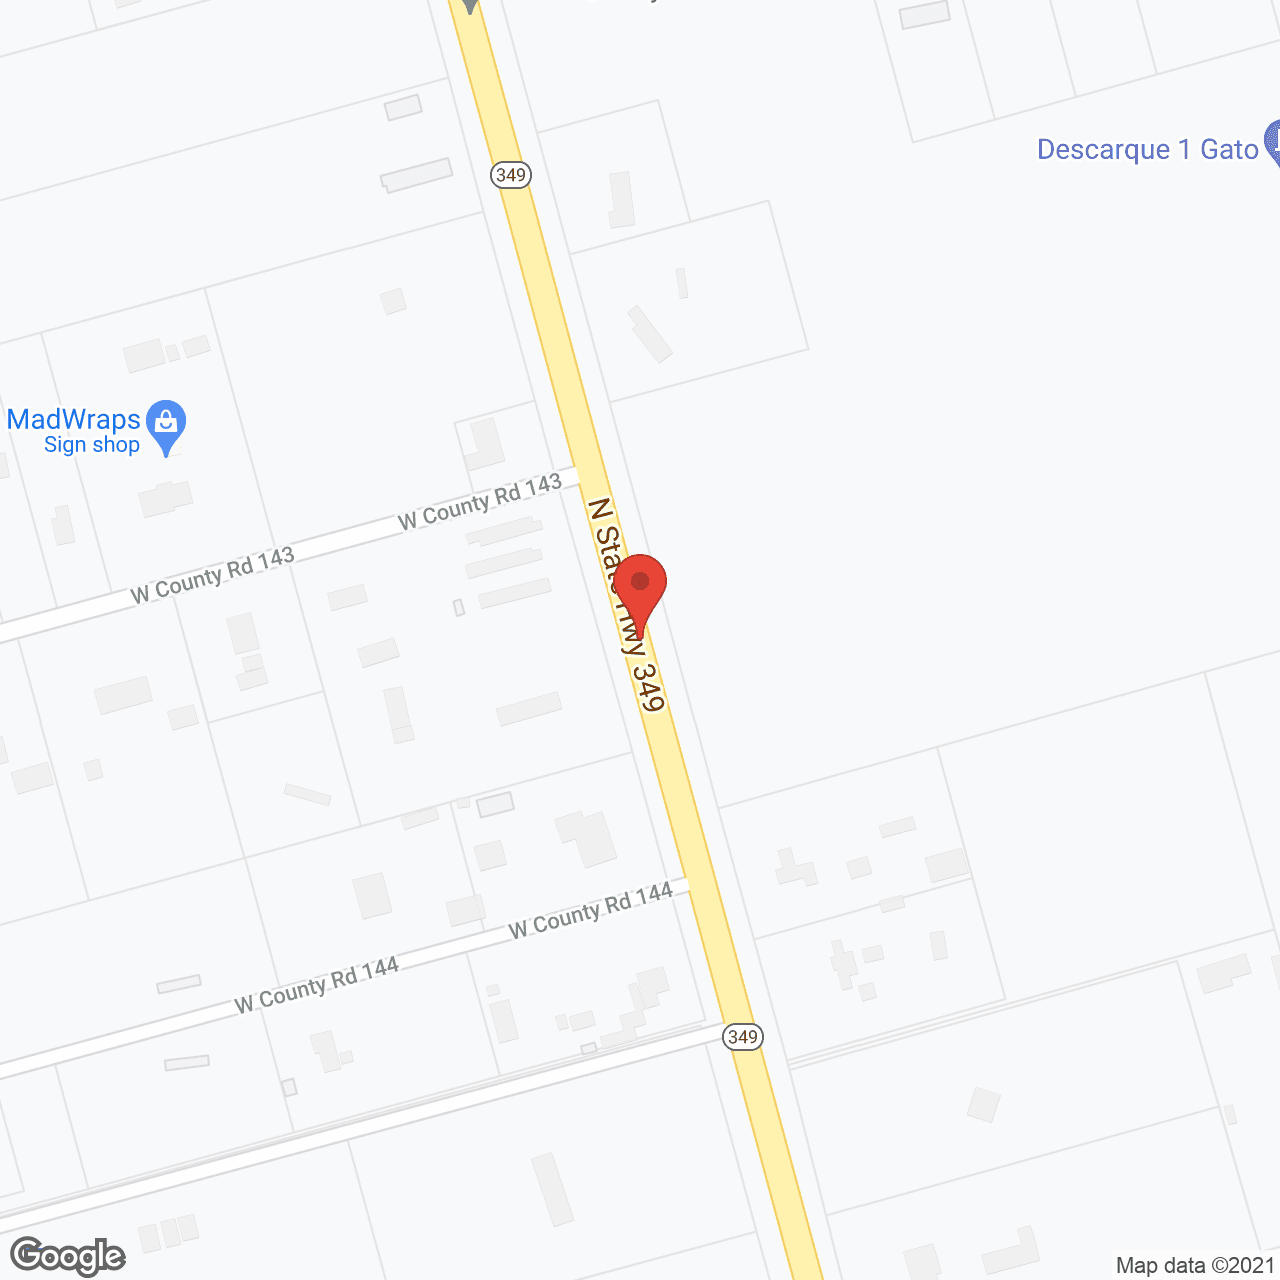 TheKey of Midland, TX in google map